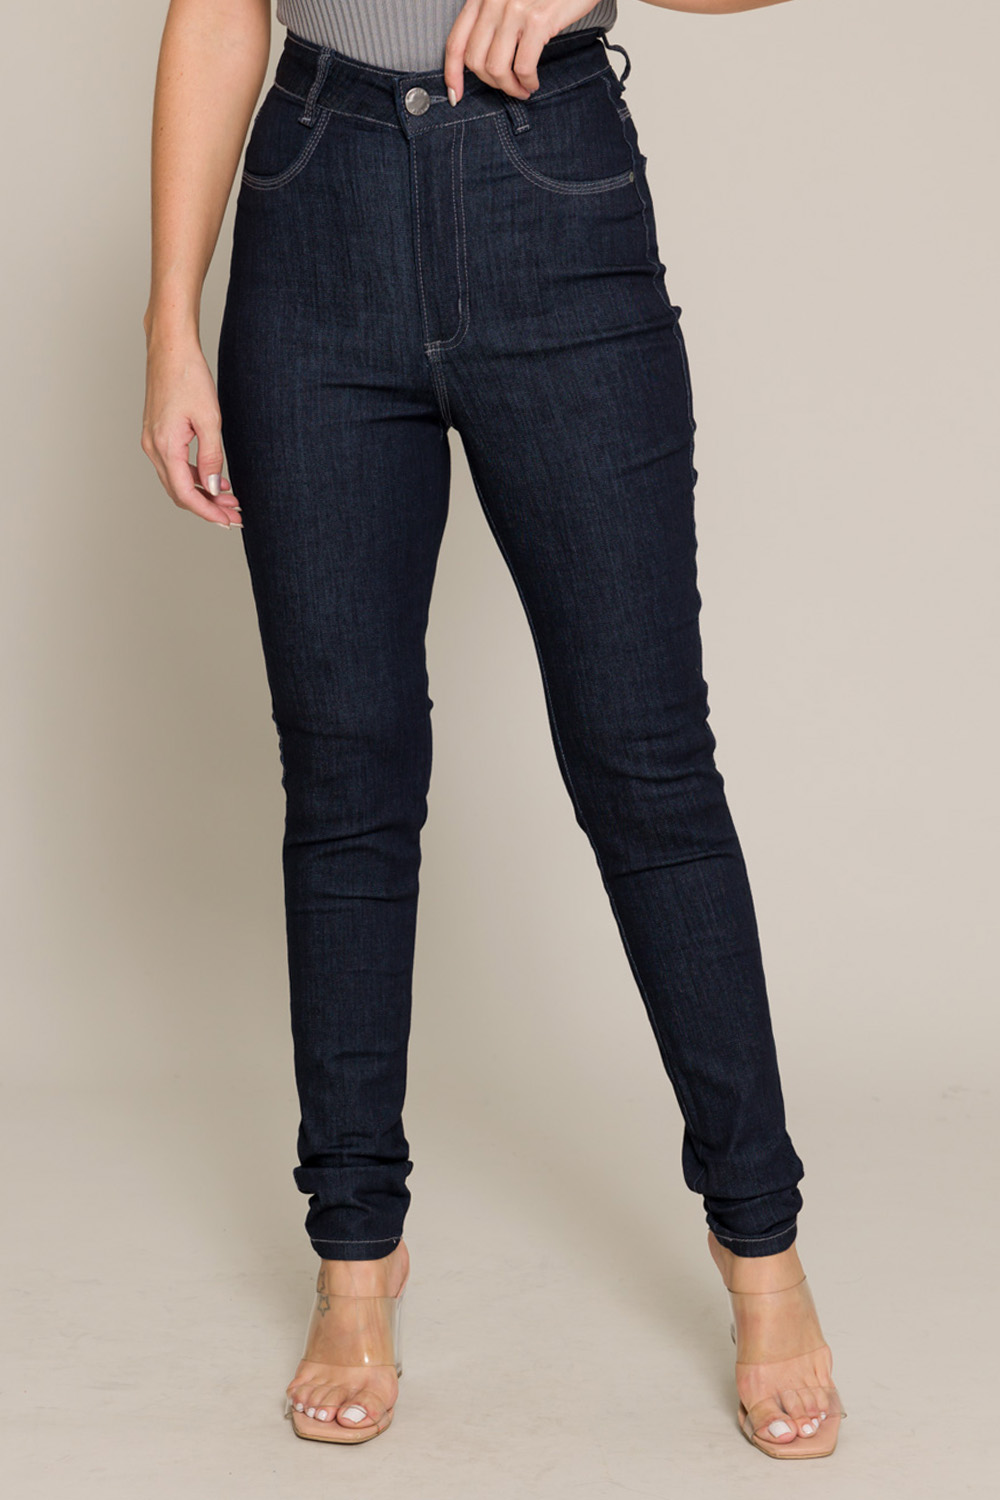 Calça Jeans Skinny Hot Pant Basic 11610 - Jeans Amaciado